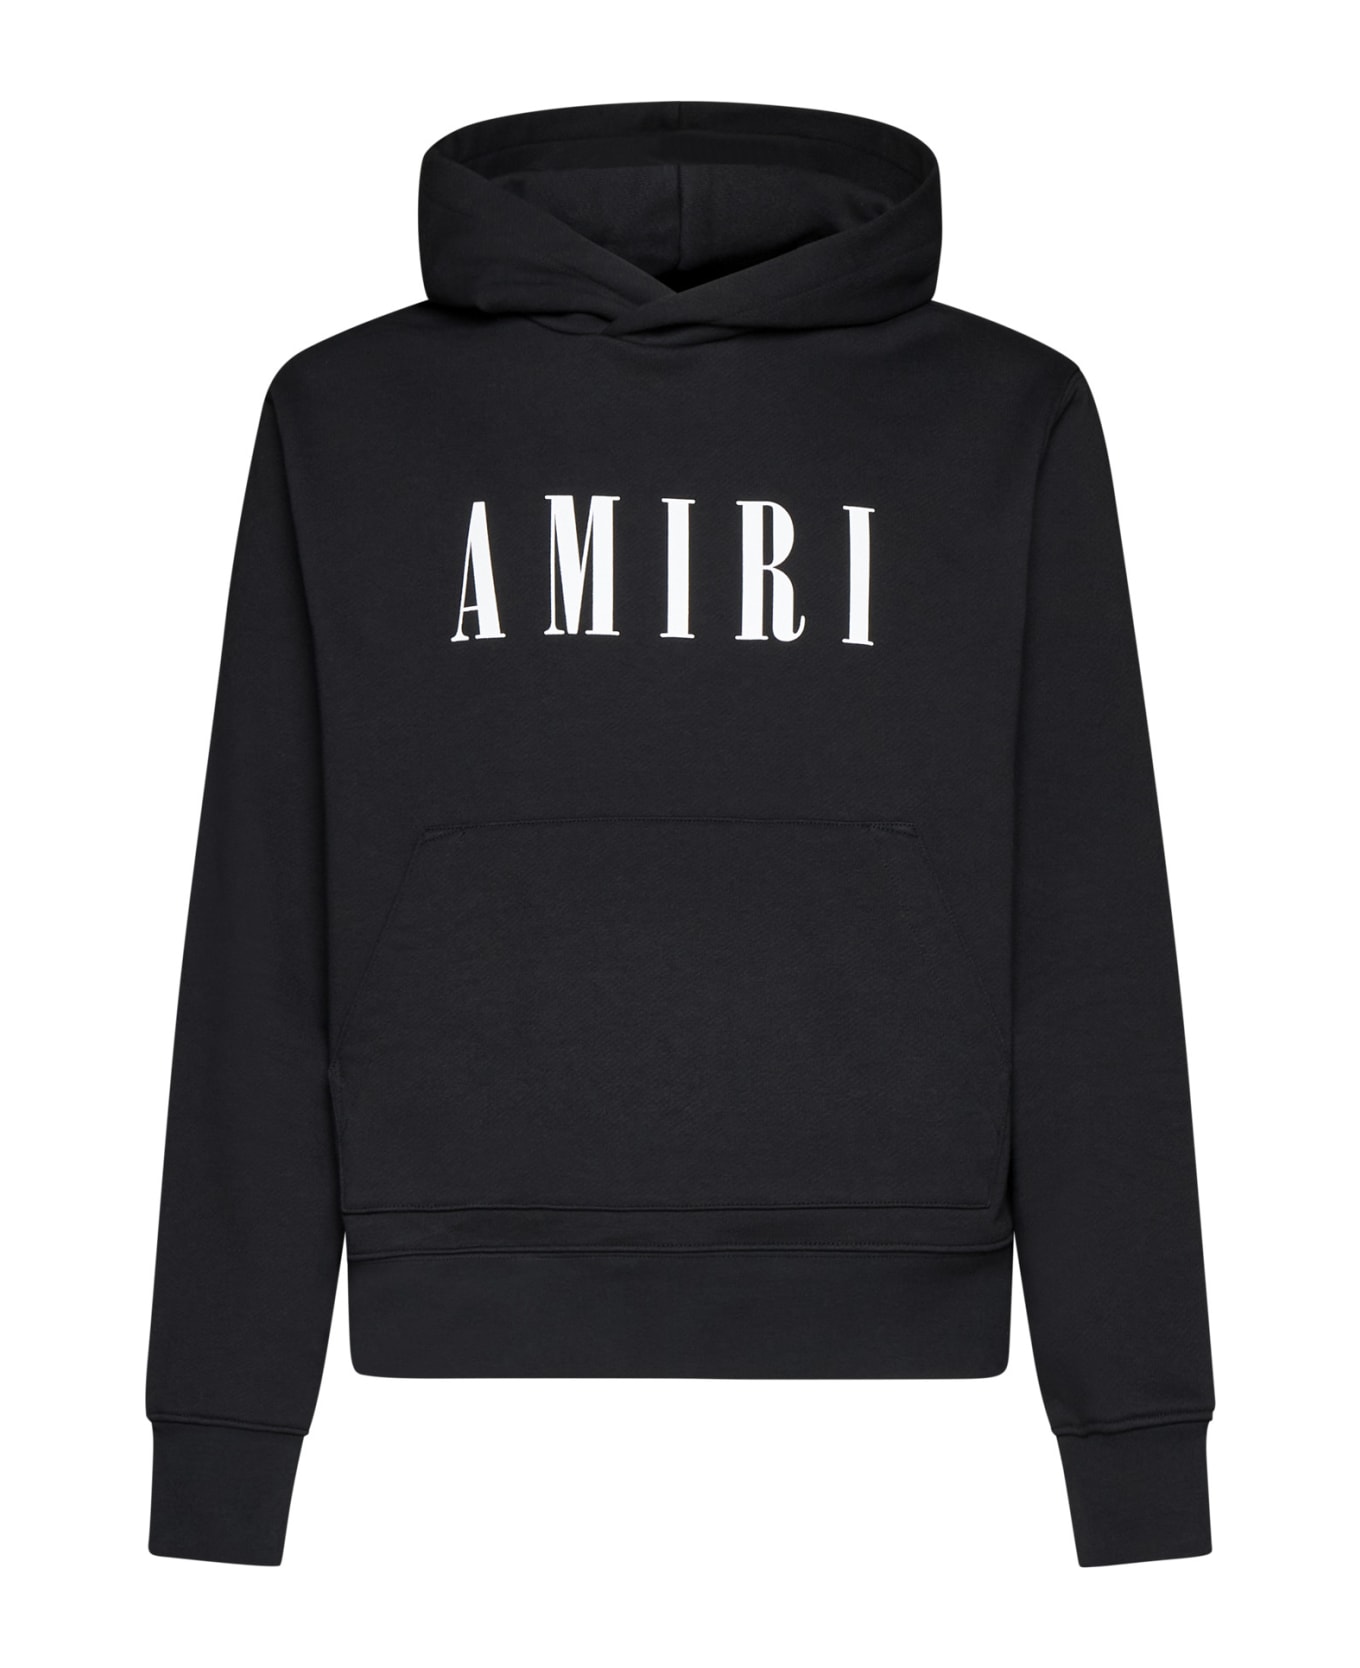 AMIRI Fleece - Black